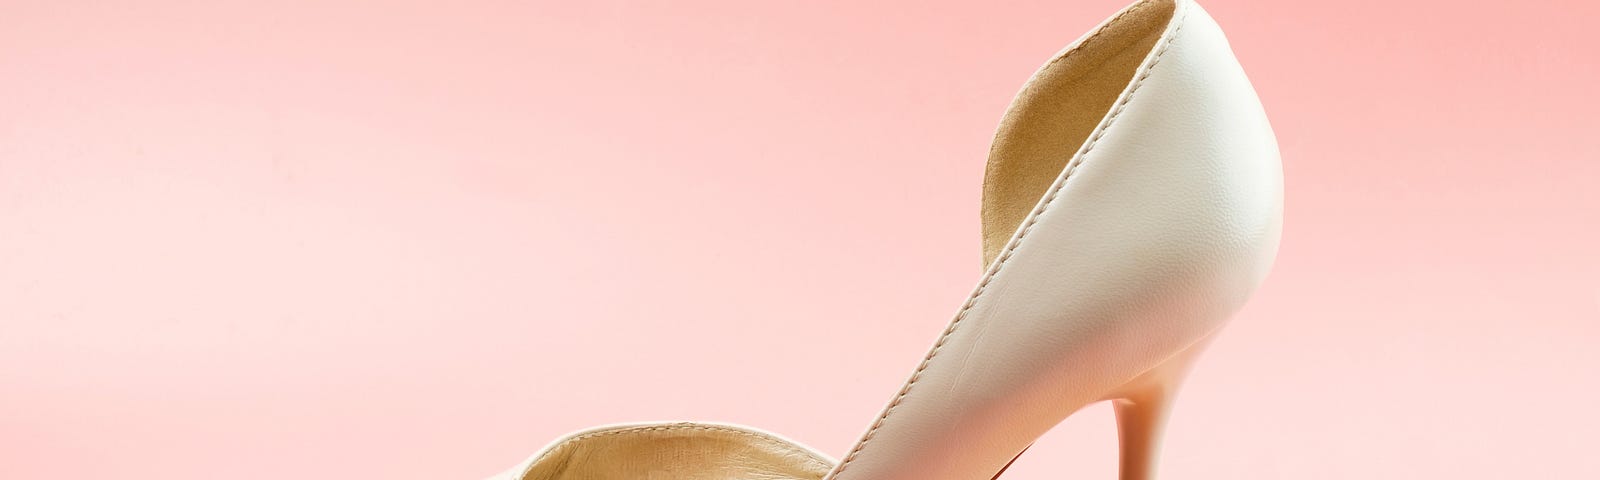 A white stiletto heel steps on an egg, breaking it